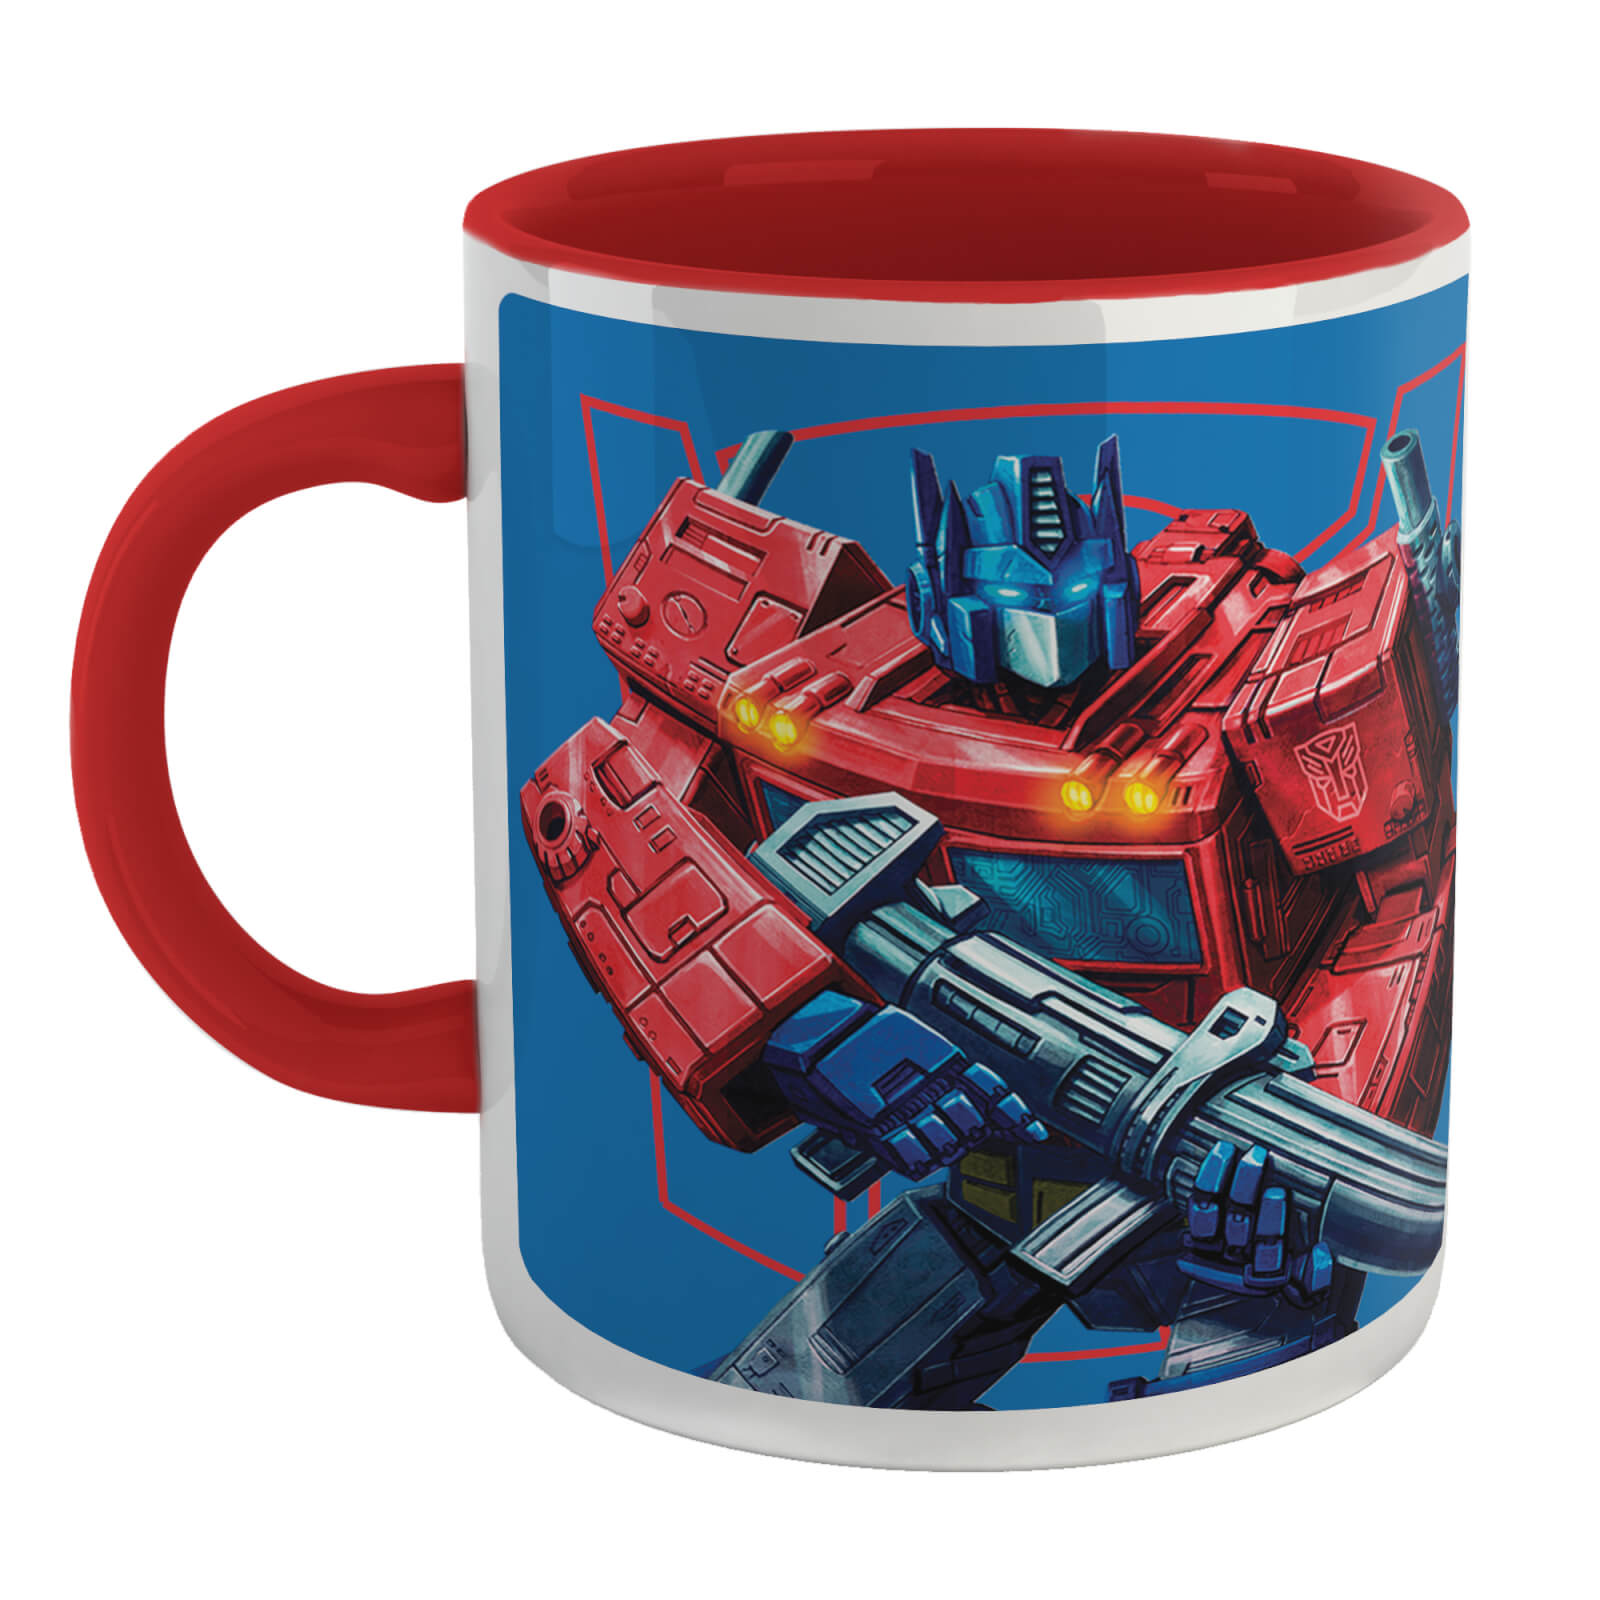 Transformers Optimus Prime Mug - White/Red